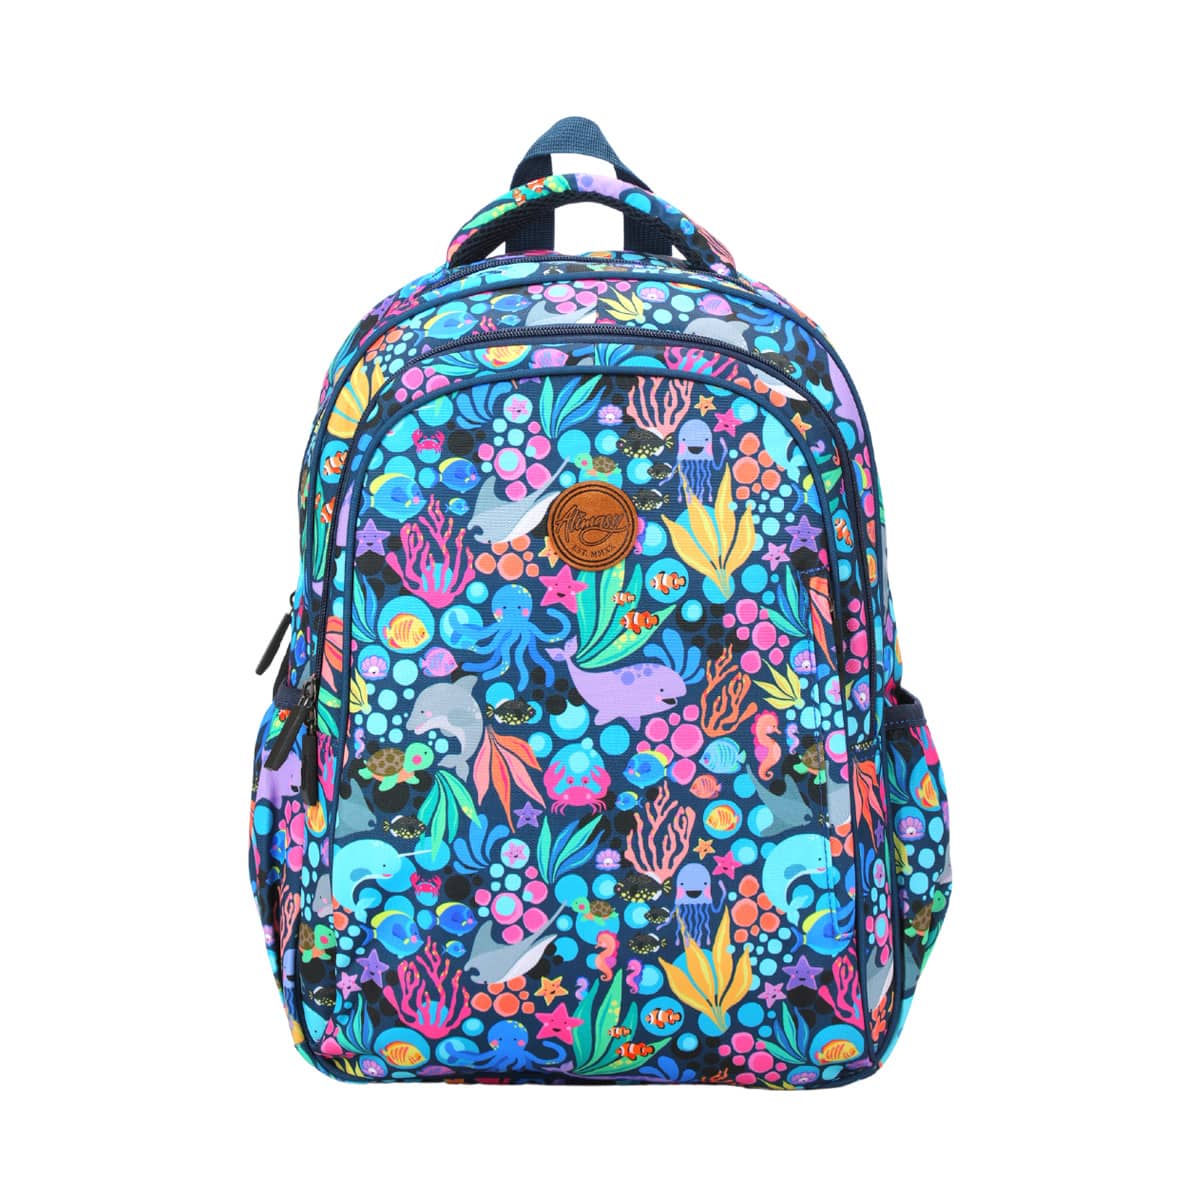 Alimasy Midsize Backpack - Kasey Rainbow - Sealife